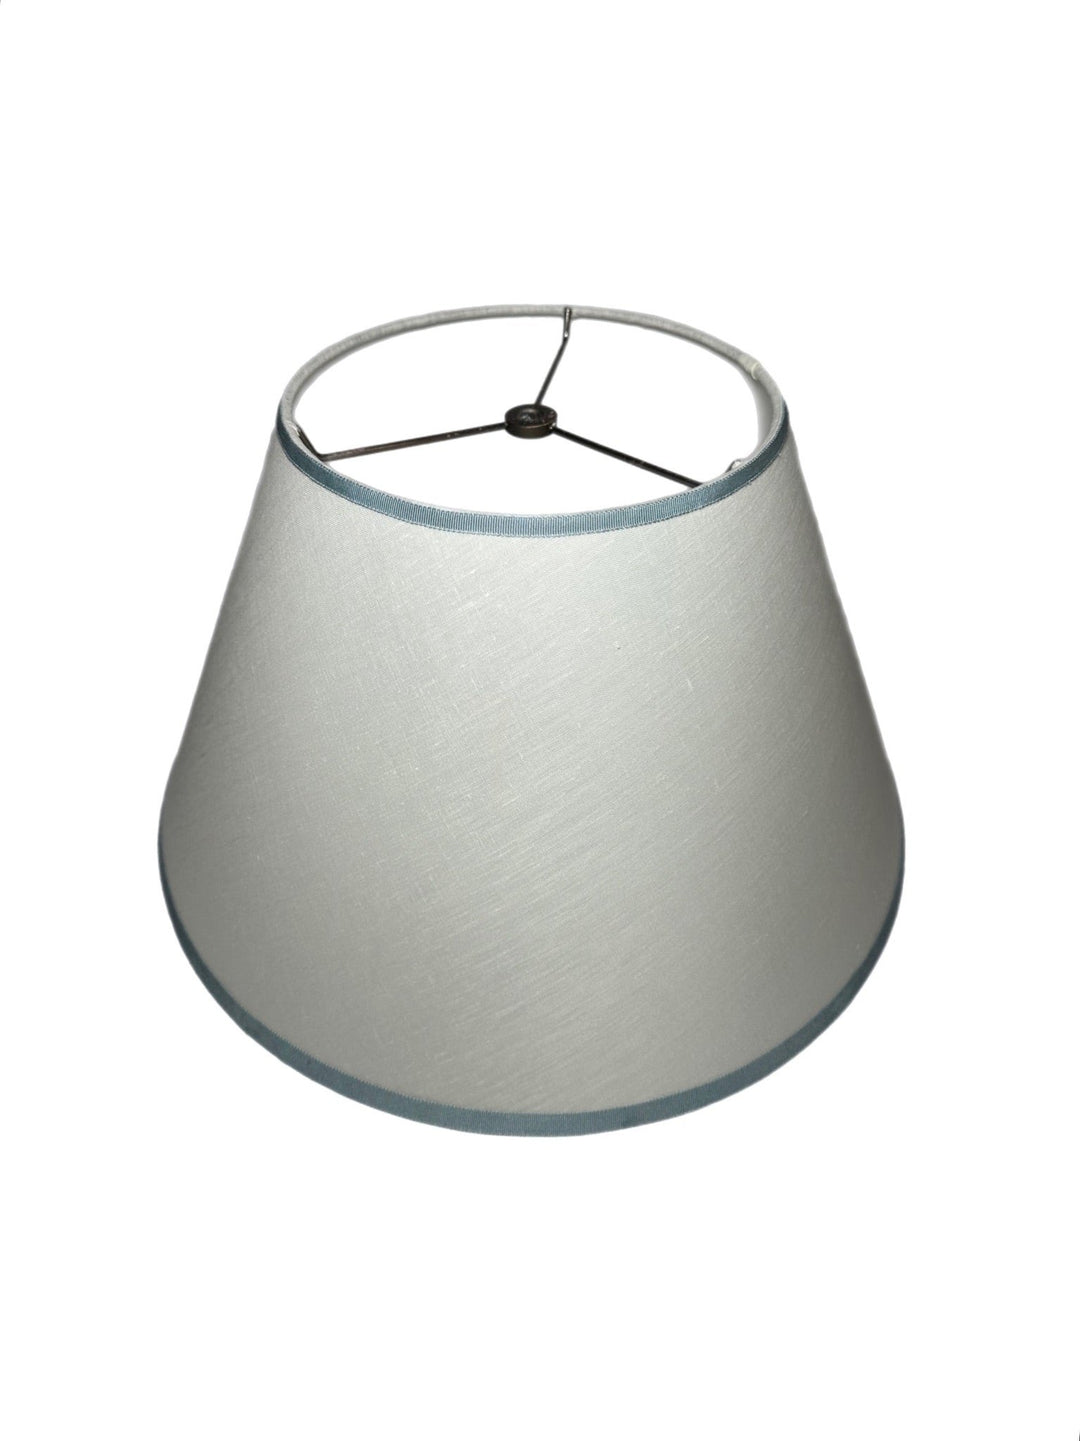 Linen Empire Lamp Shade: 6 Sizes + Custom Trim Options - Lux Lamp Shades